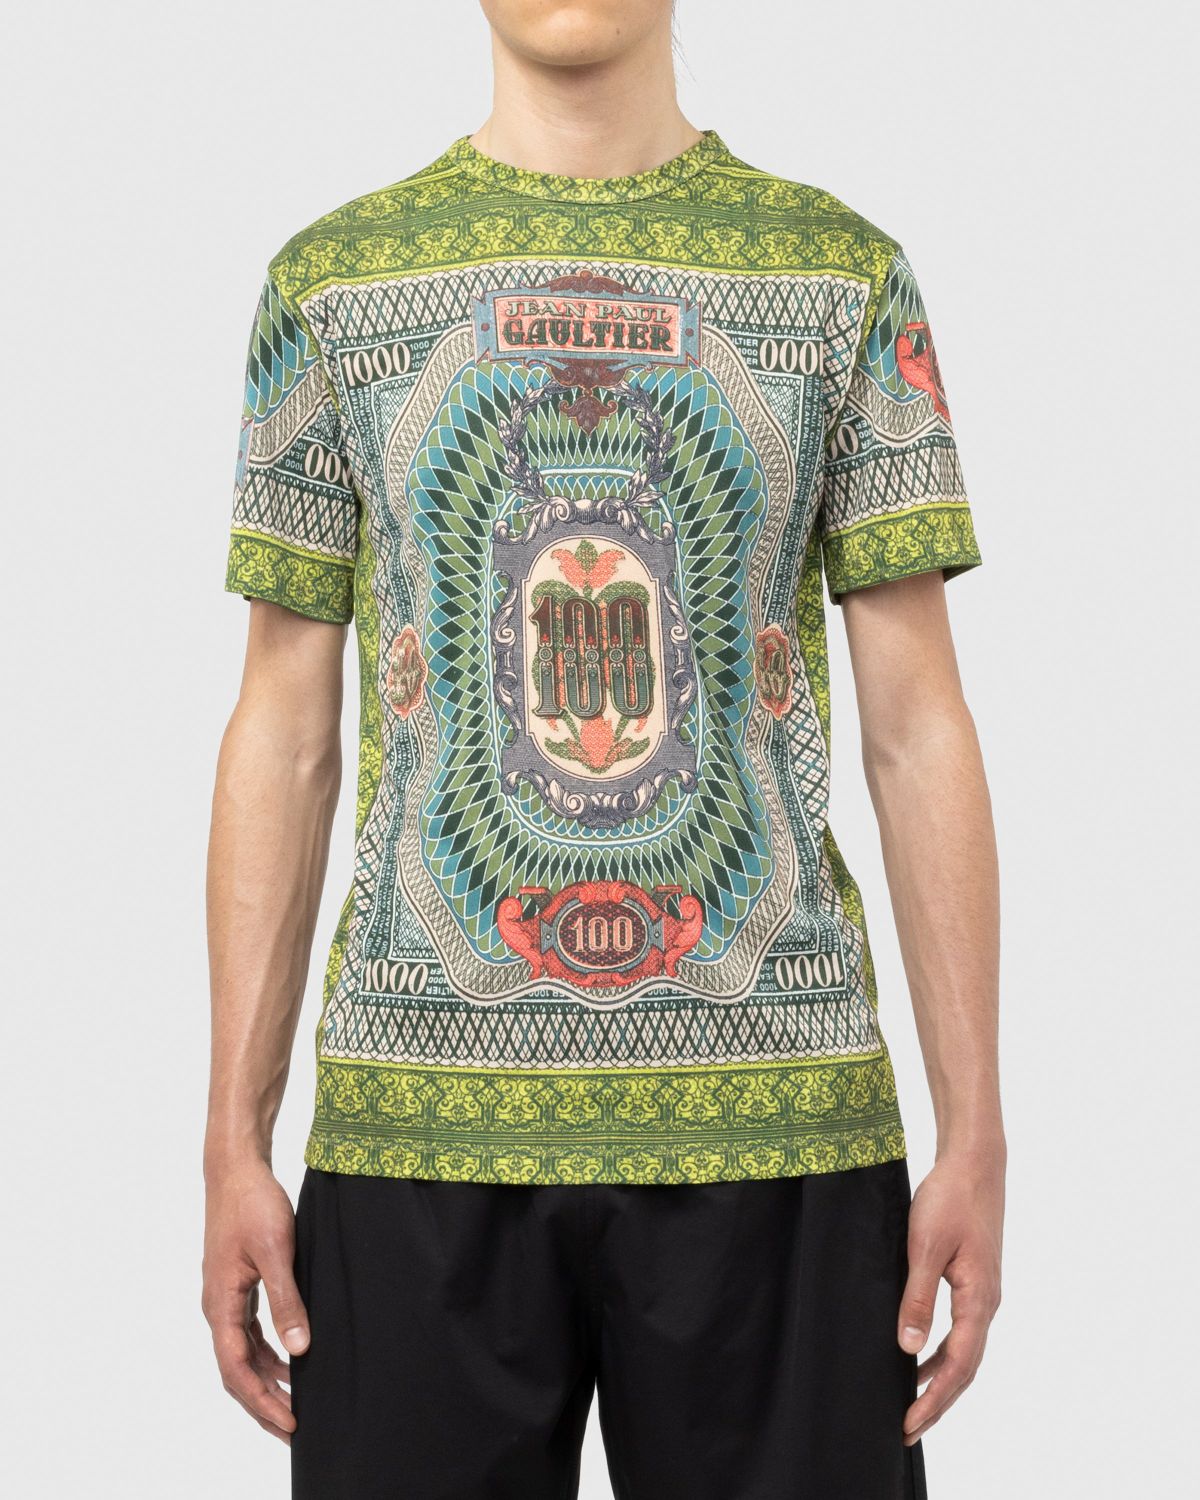 Jean Paul Gaultier – Banknote T-Shirt Multi | Highsnobiety Shop